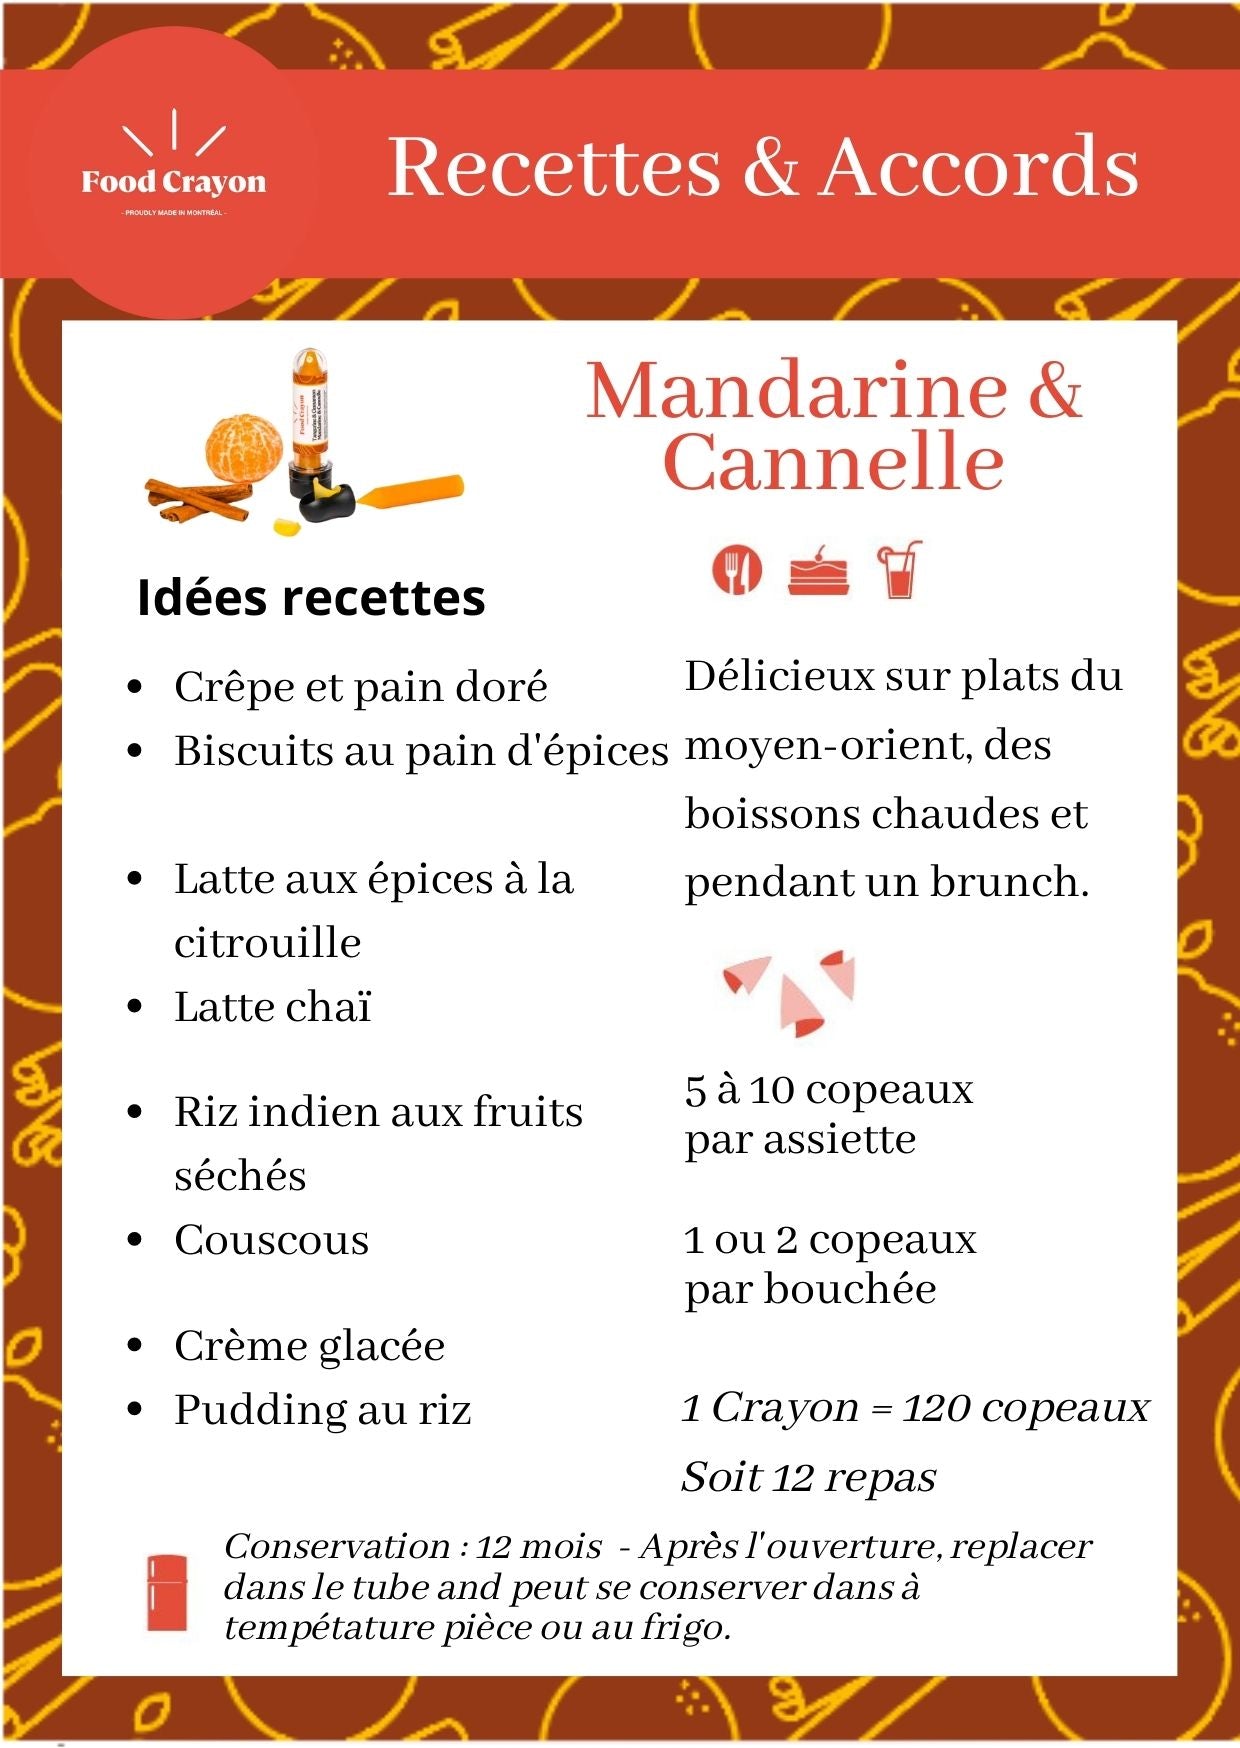 Mandarine & Cannelle